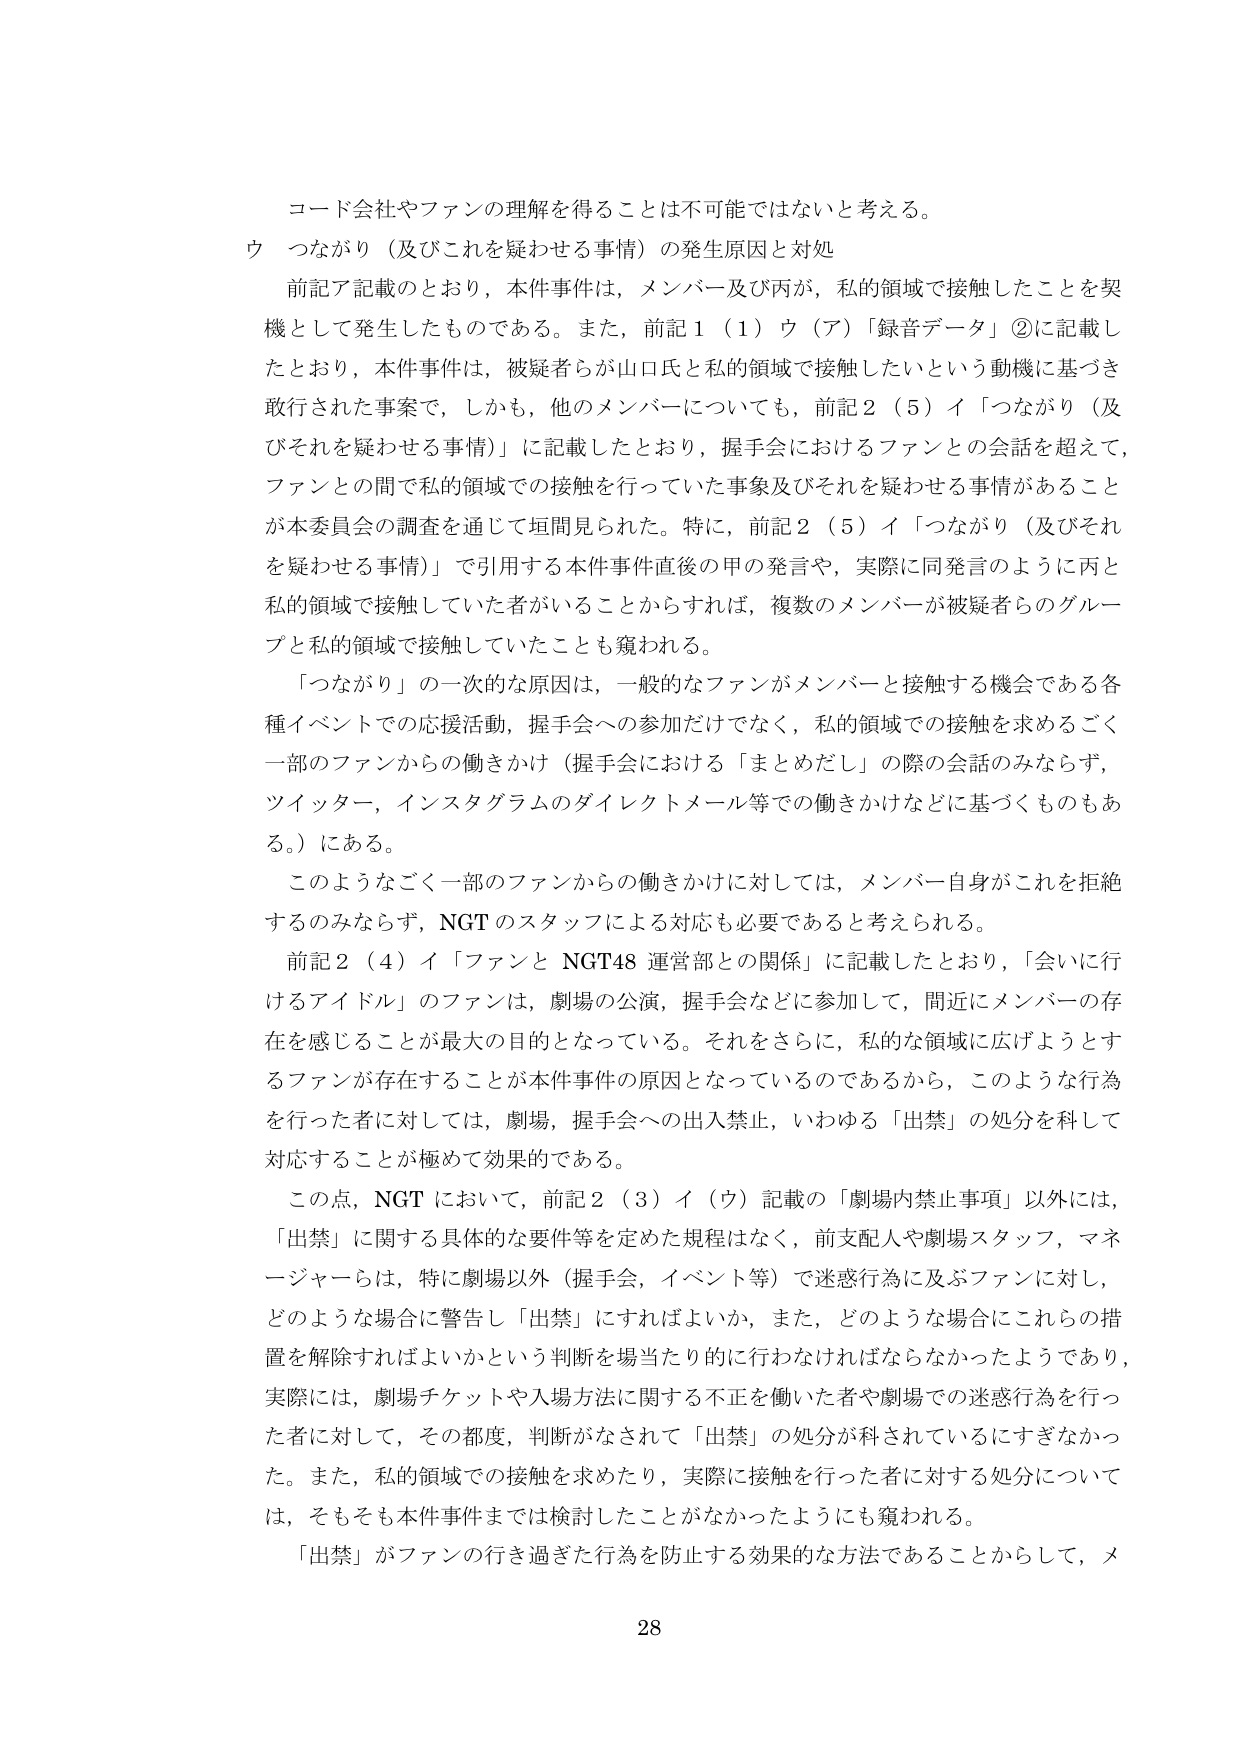 NGT48第三者委員会調査報告書30